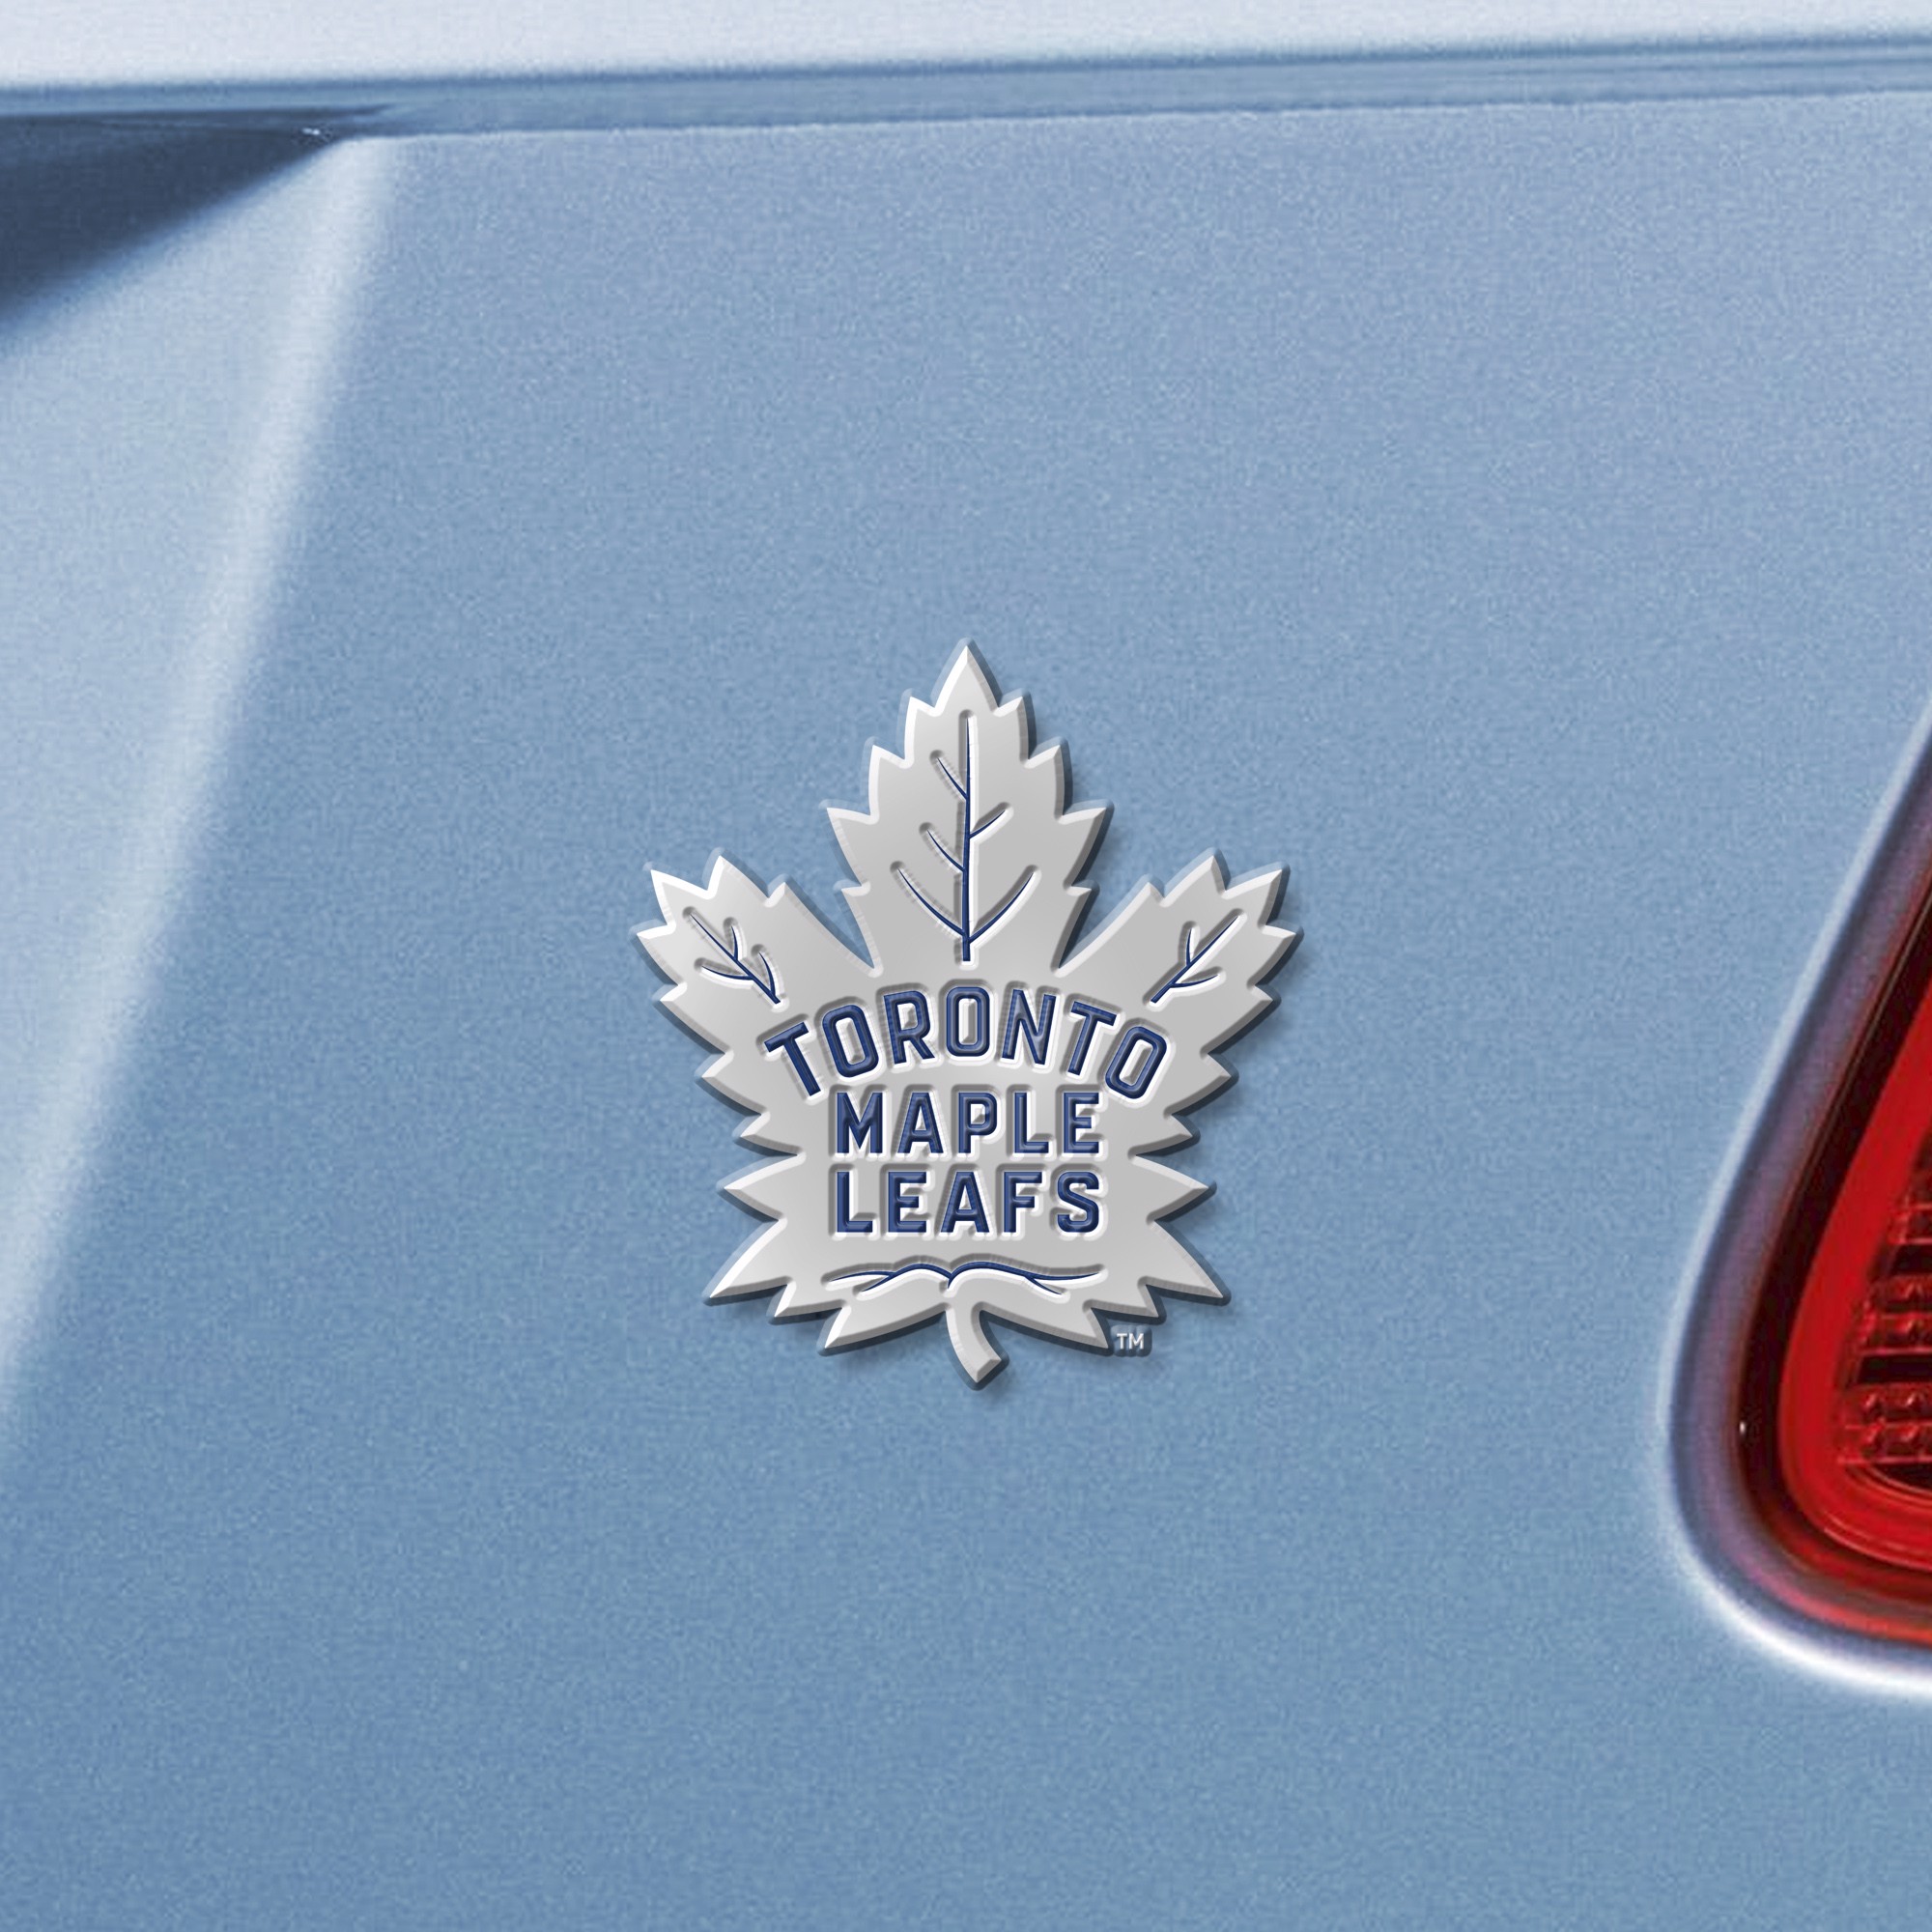 Pin on Toronto Maple Leafs